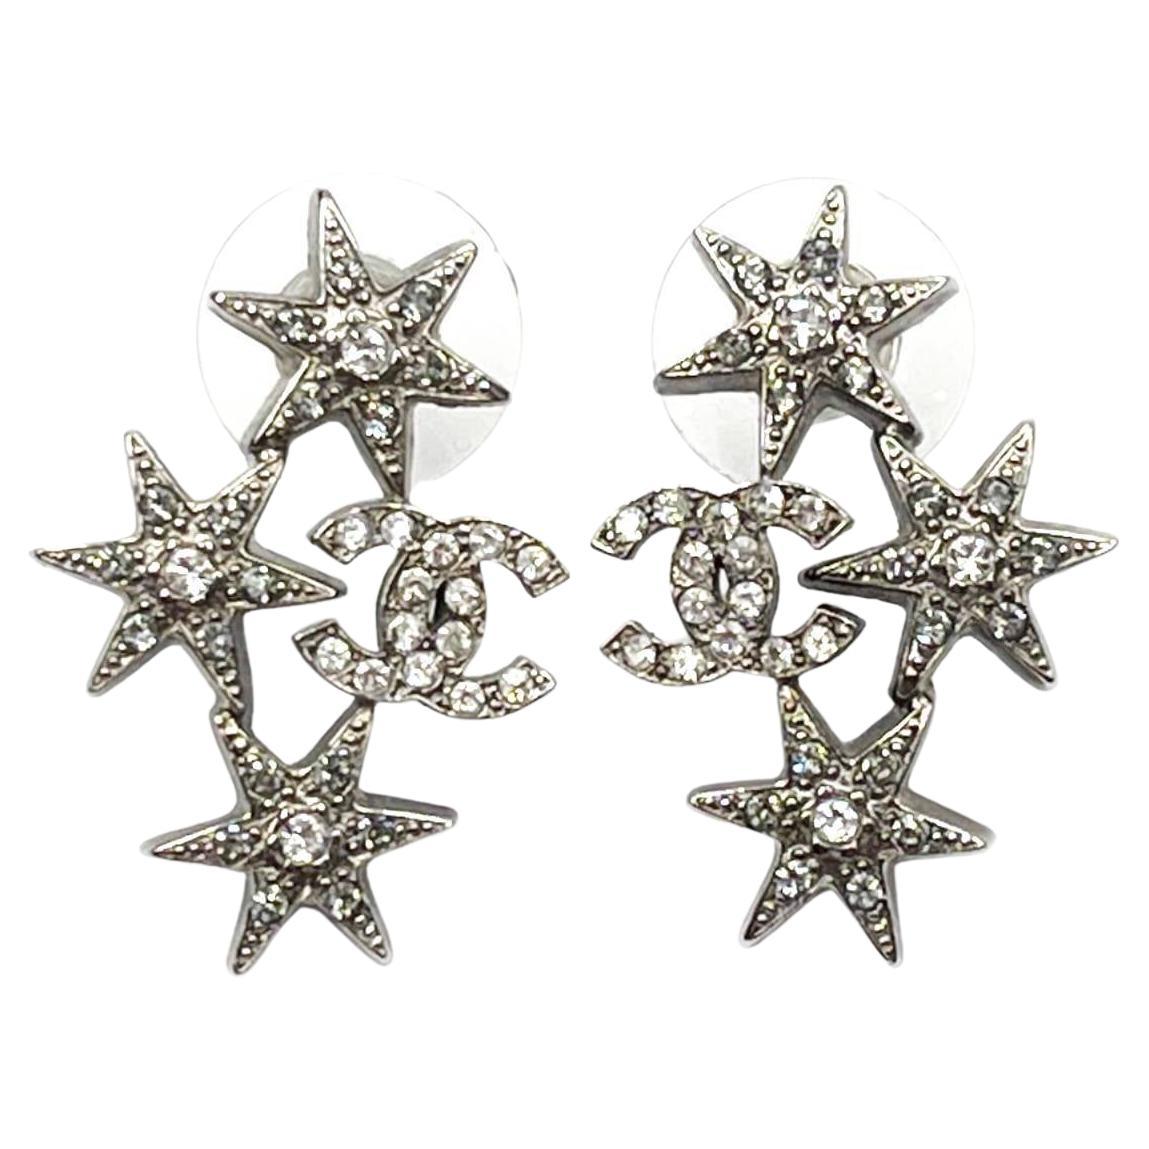 Chanel Silver CC Star Cluster Crystal Piercing Earrings